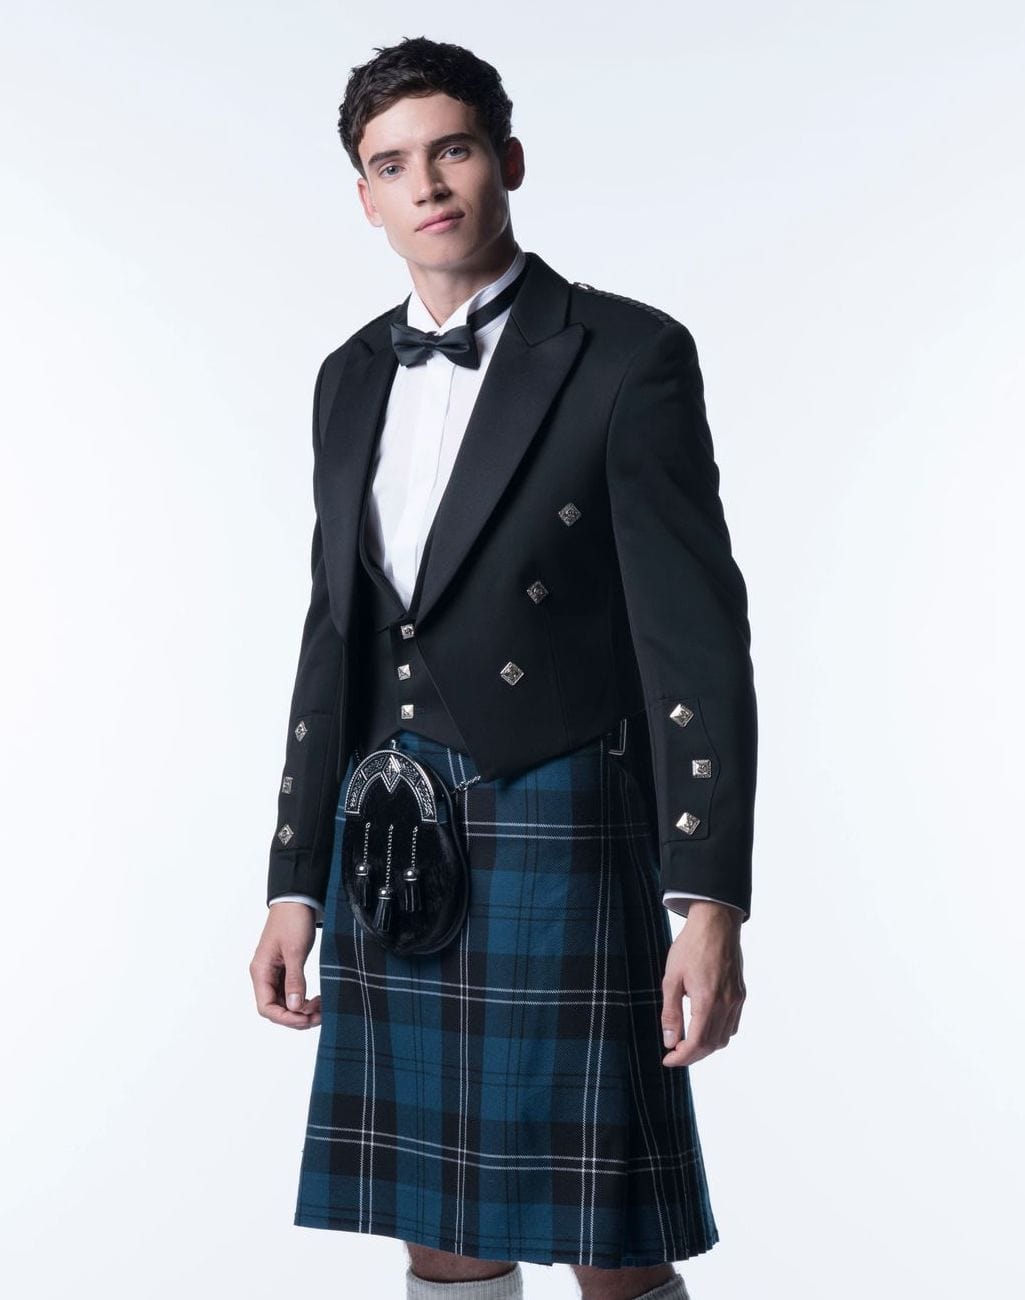 Budget Prince Charlie Kilt Jacket and Vest - MacGregor and MacDuff